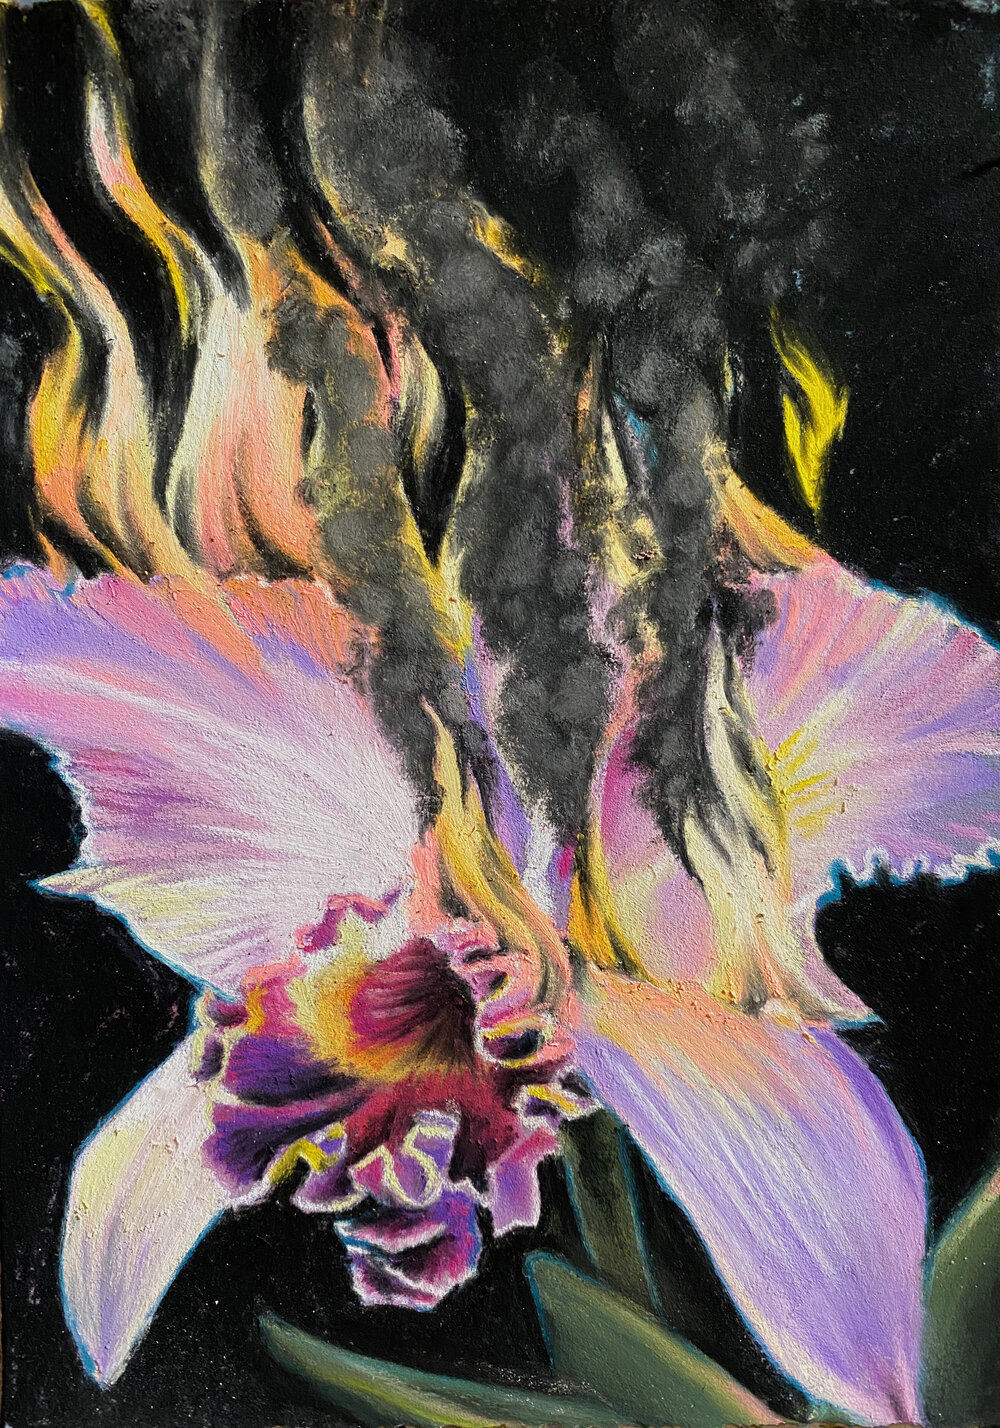 Flaming blossom